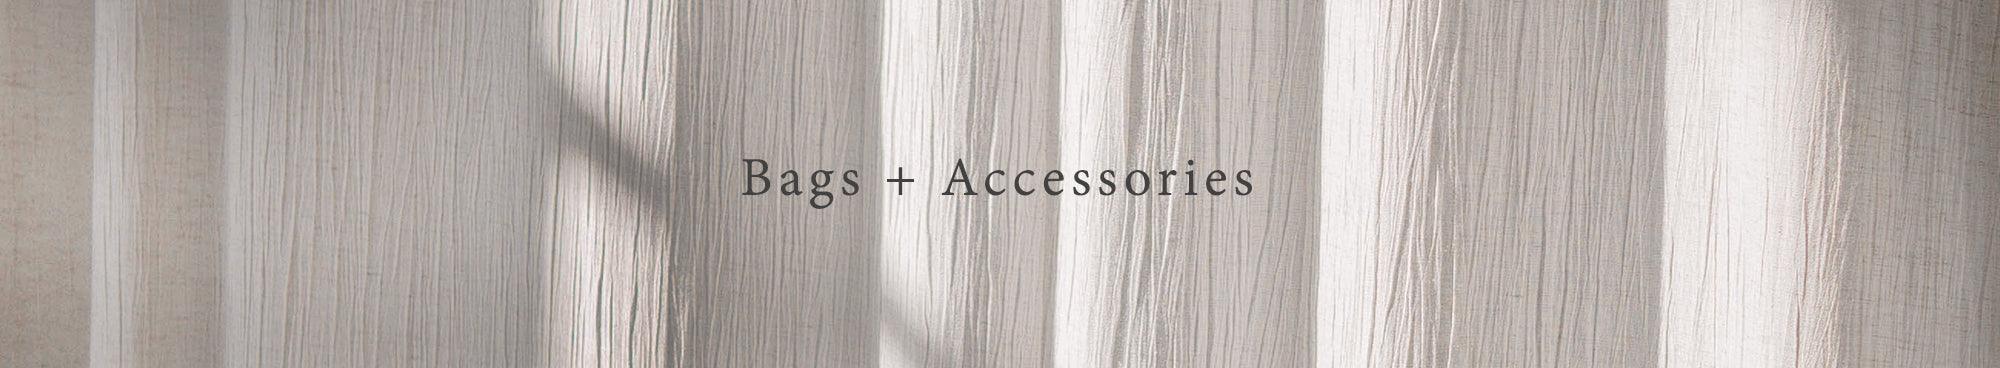 Bags + Accessories - Rikumo